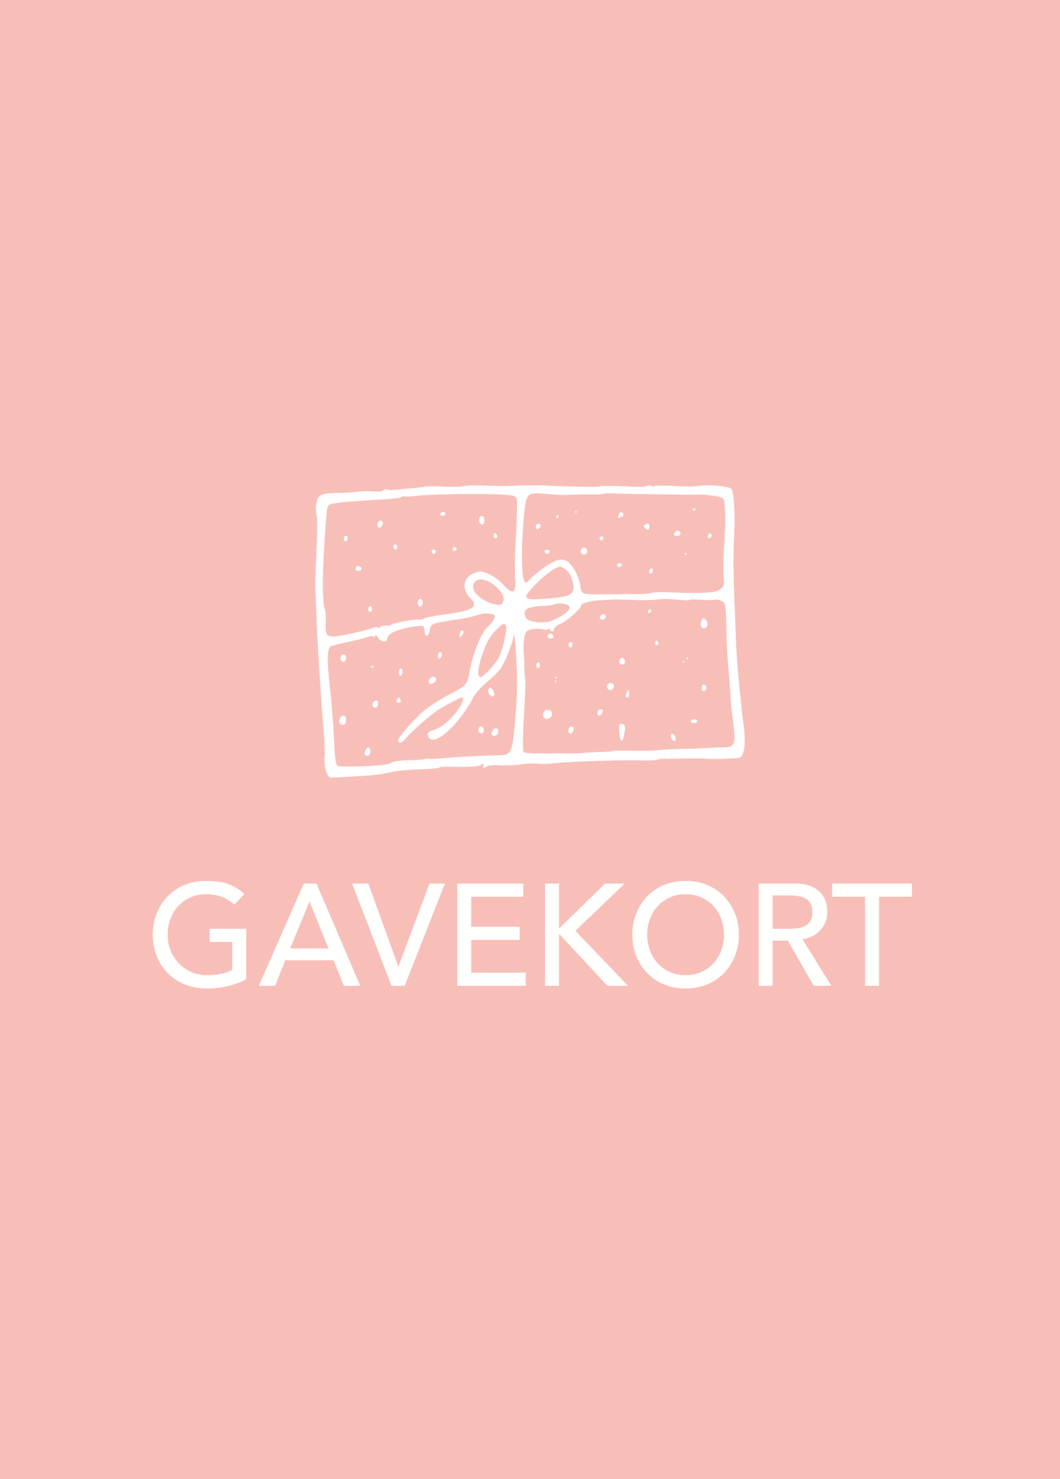 Gavekort - Gavekort - La Lume